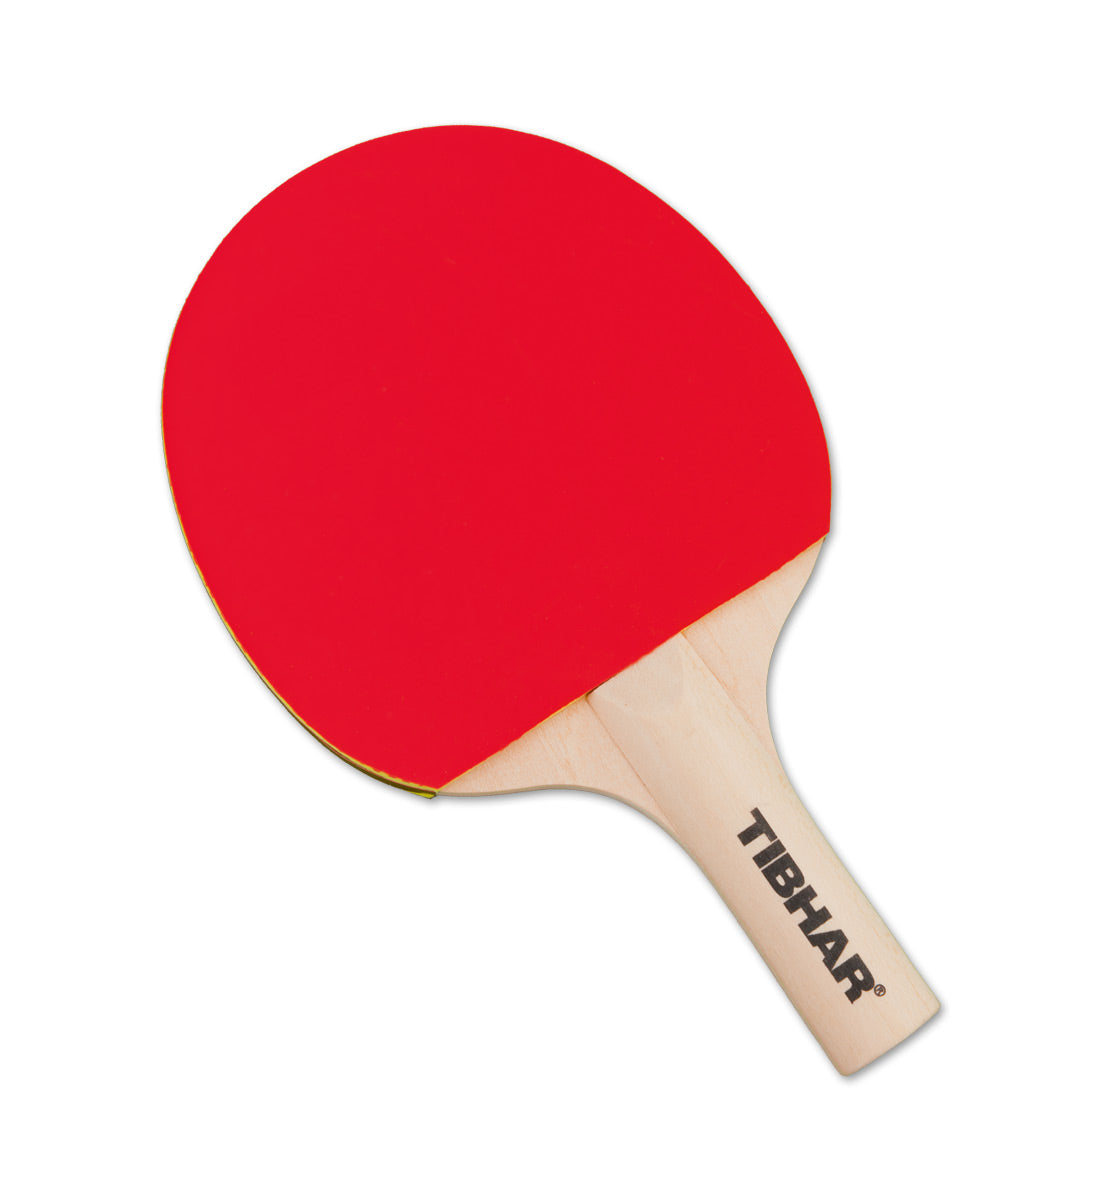 Tibhar Miniature Shakehand - Table Tennis Racket